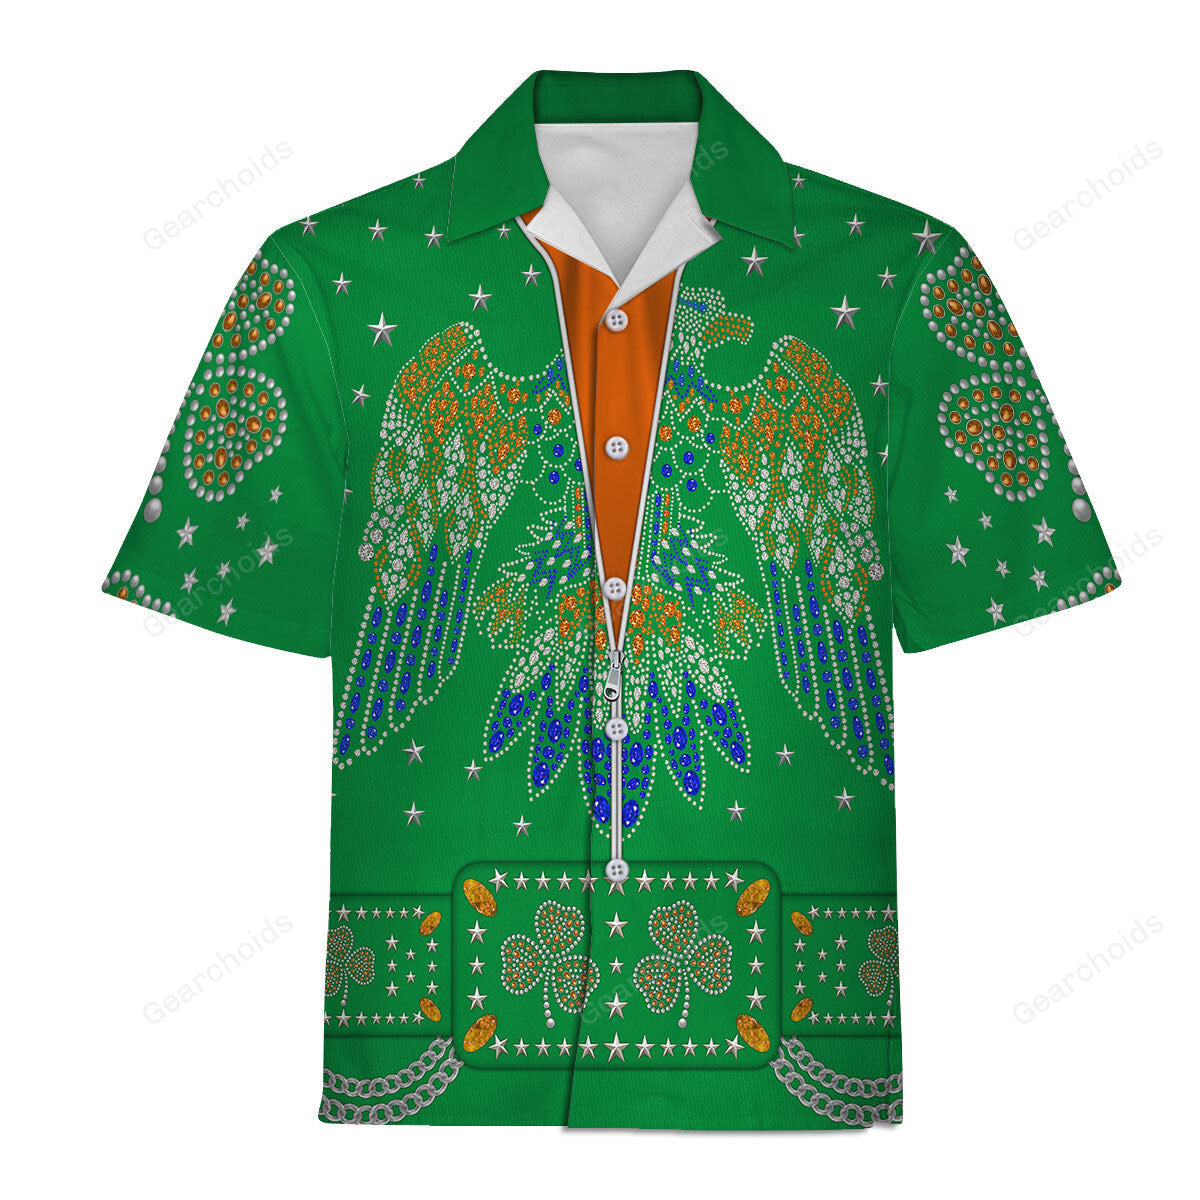 The King Elvis Presley St. Patrick'S Day - Costume Cosplay Hawaiian Shirt